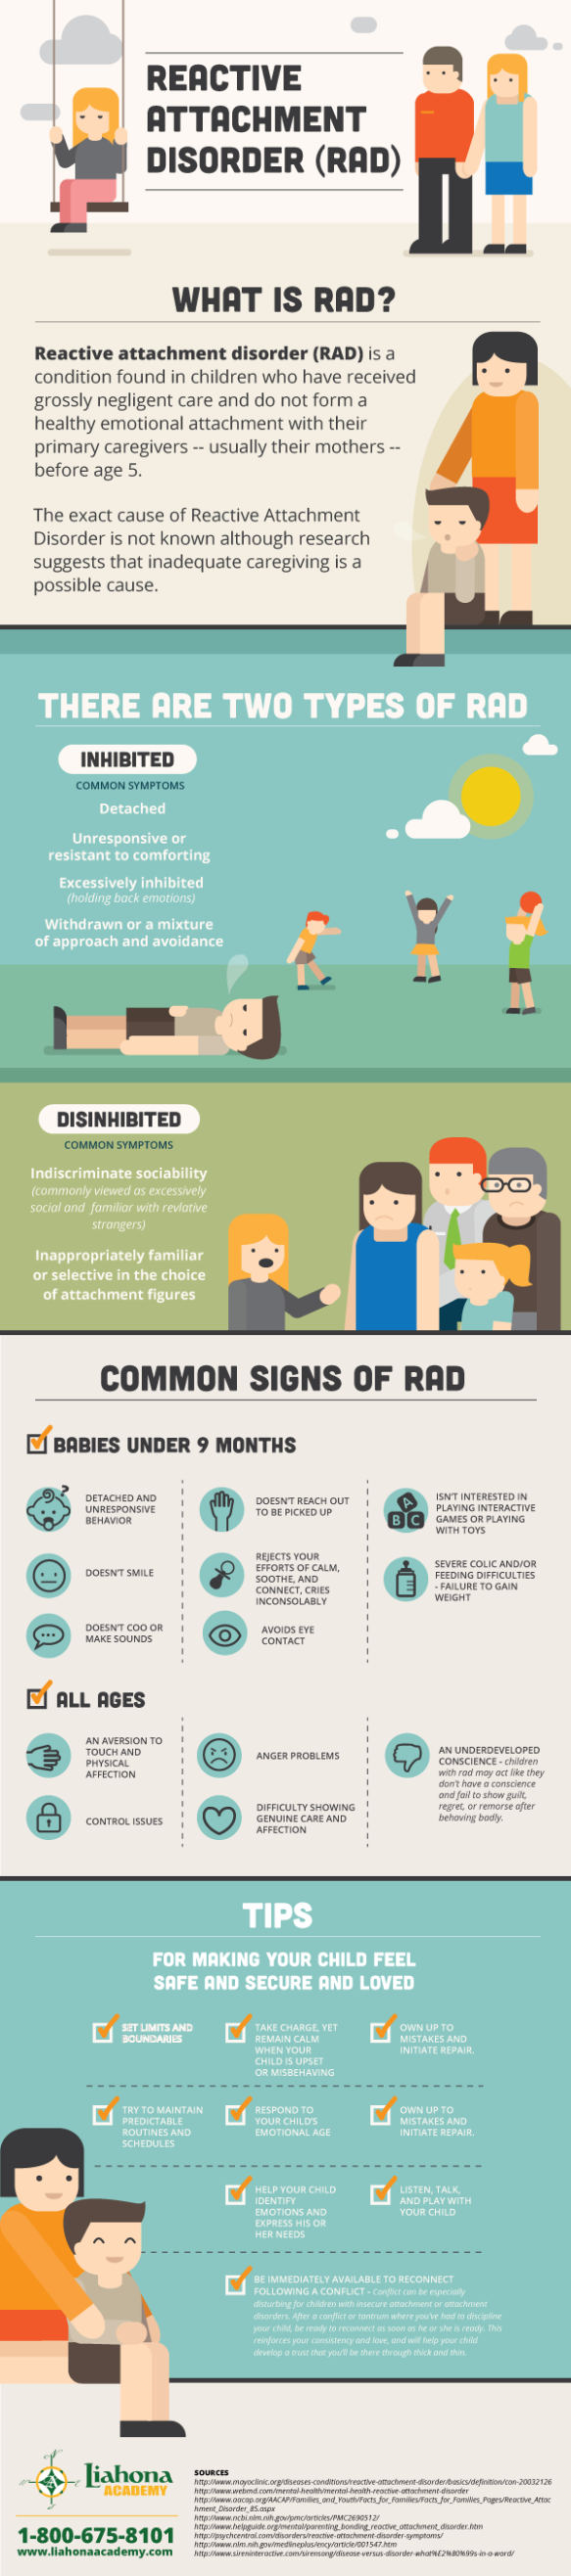 reactive-attachment-disorder-rad-infographic